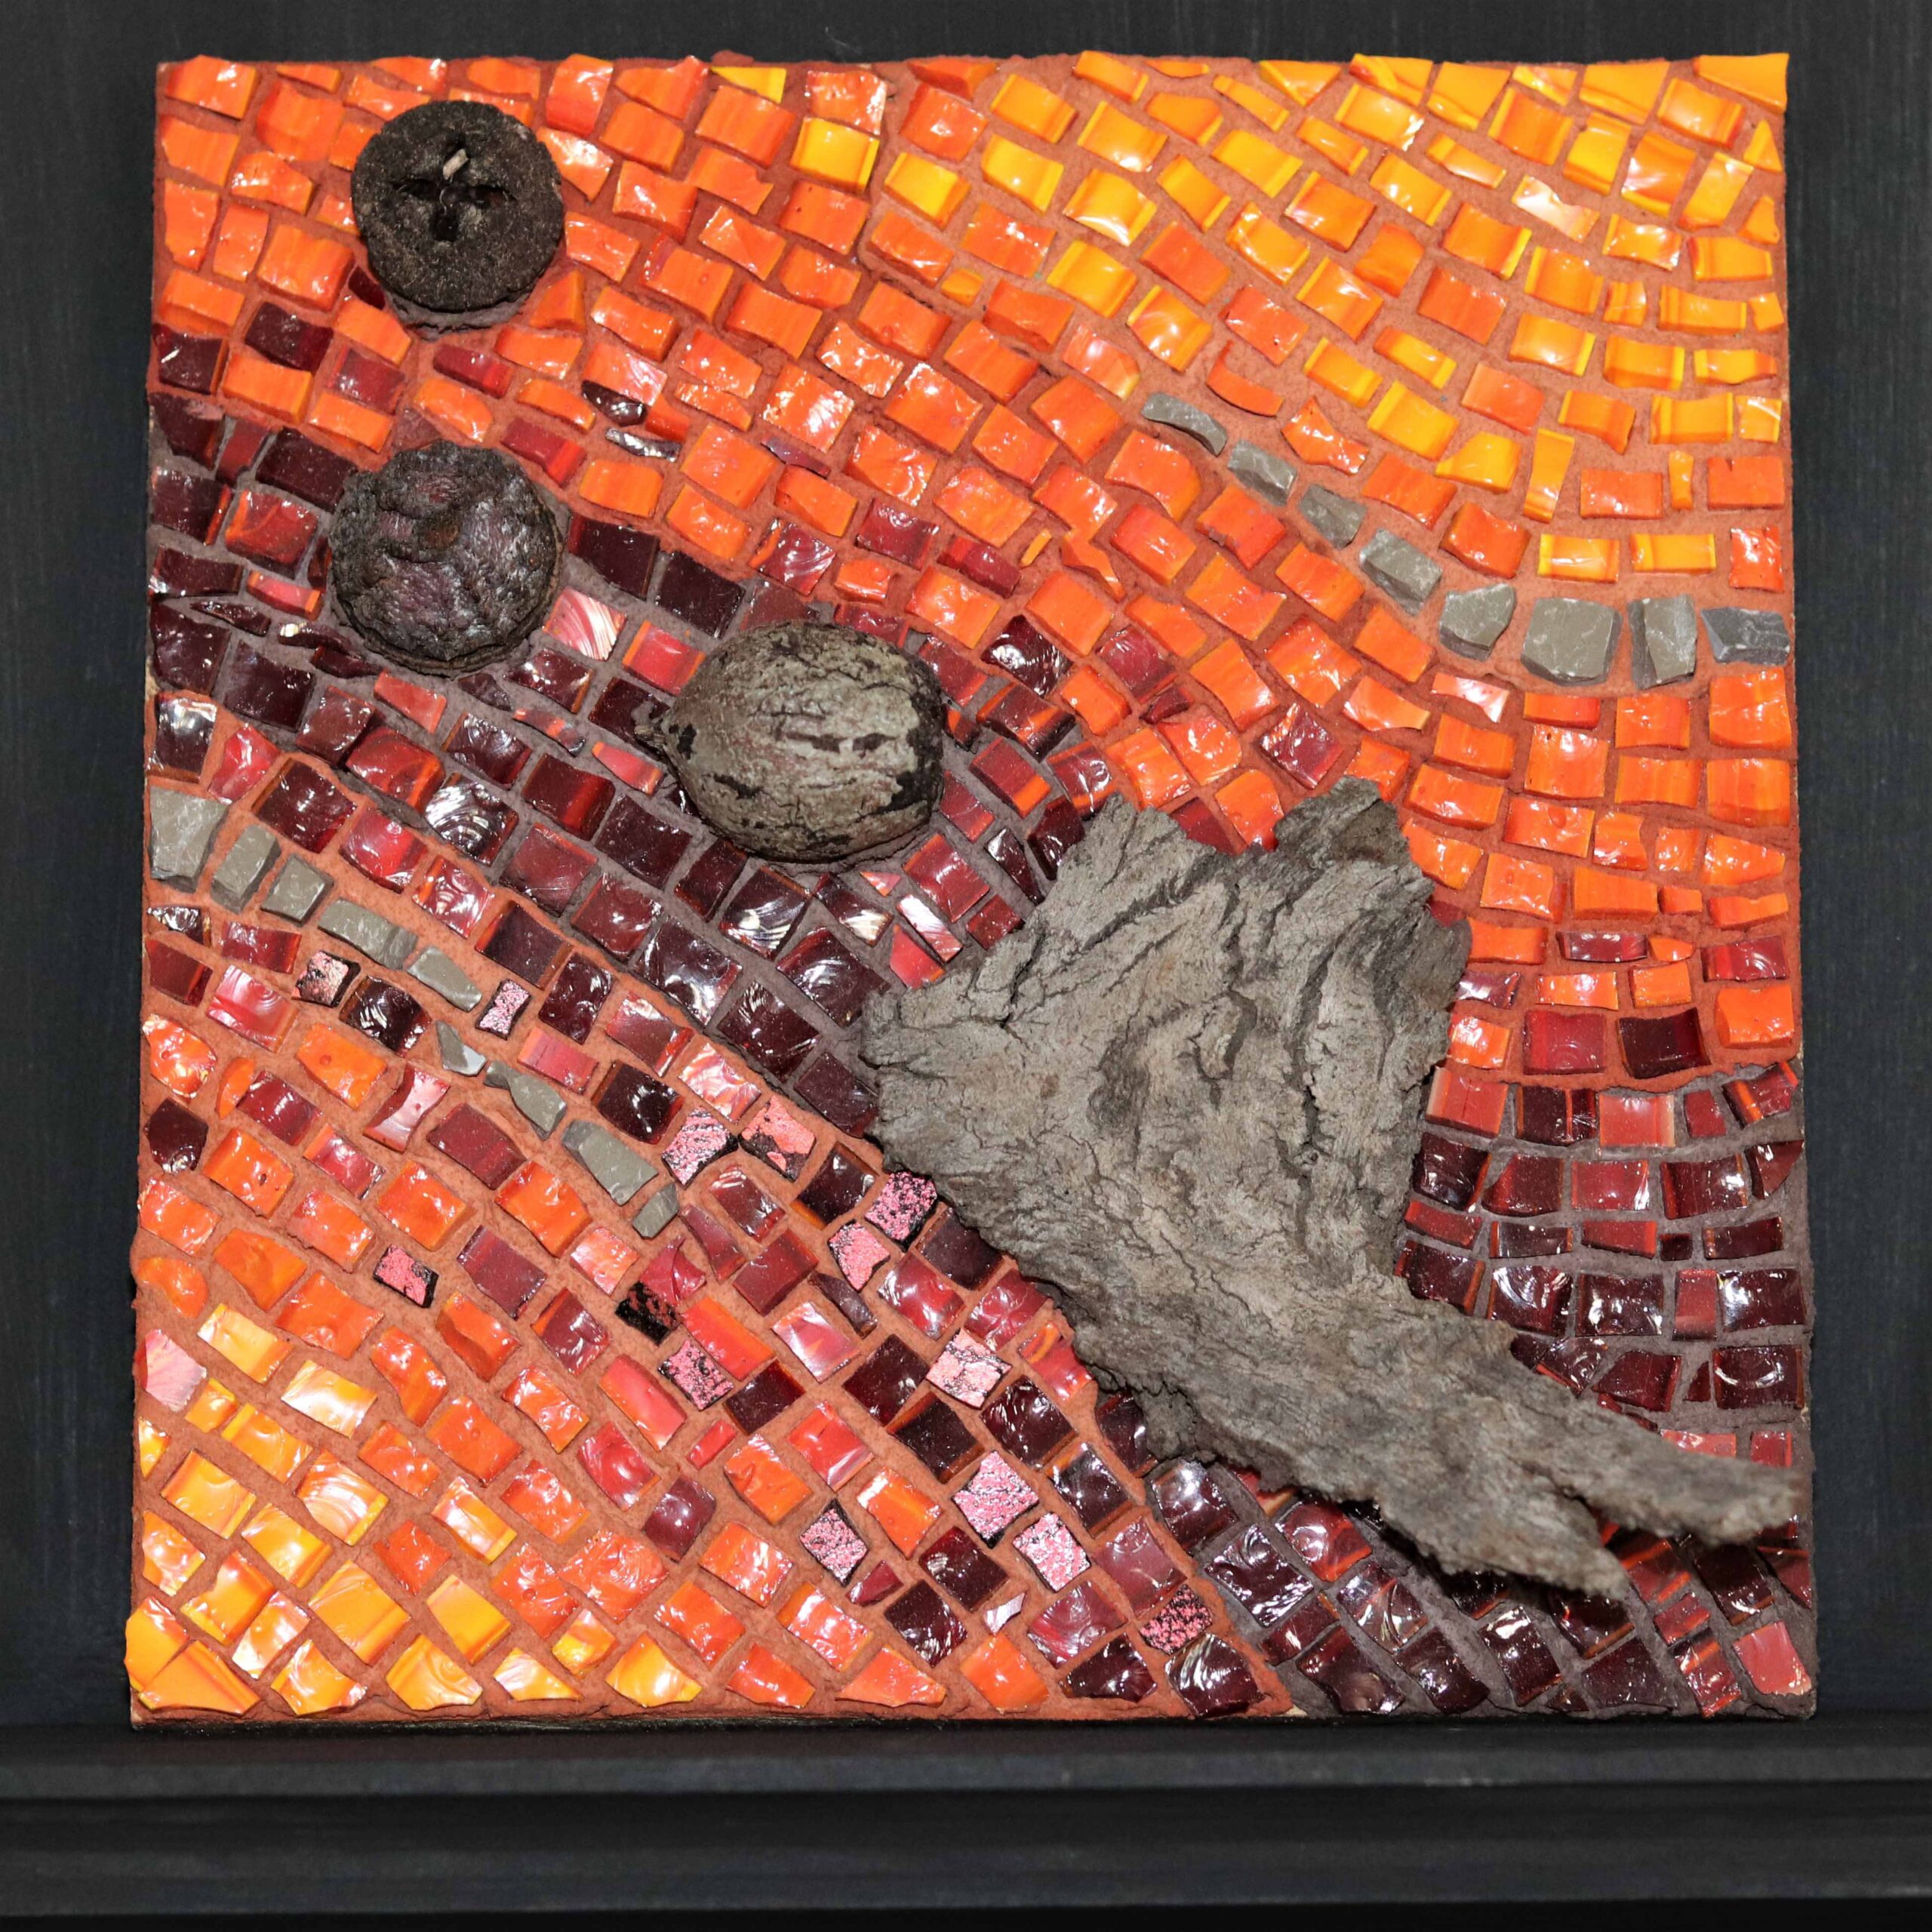 Bushfire by mosaic artist Yvette Hallam in her Artist profile